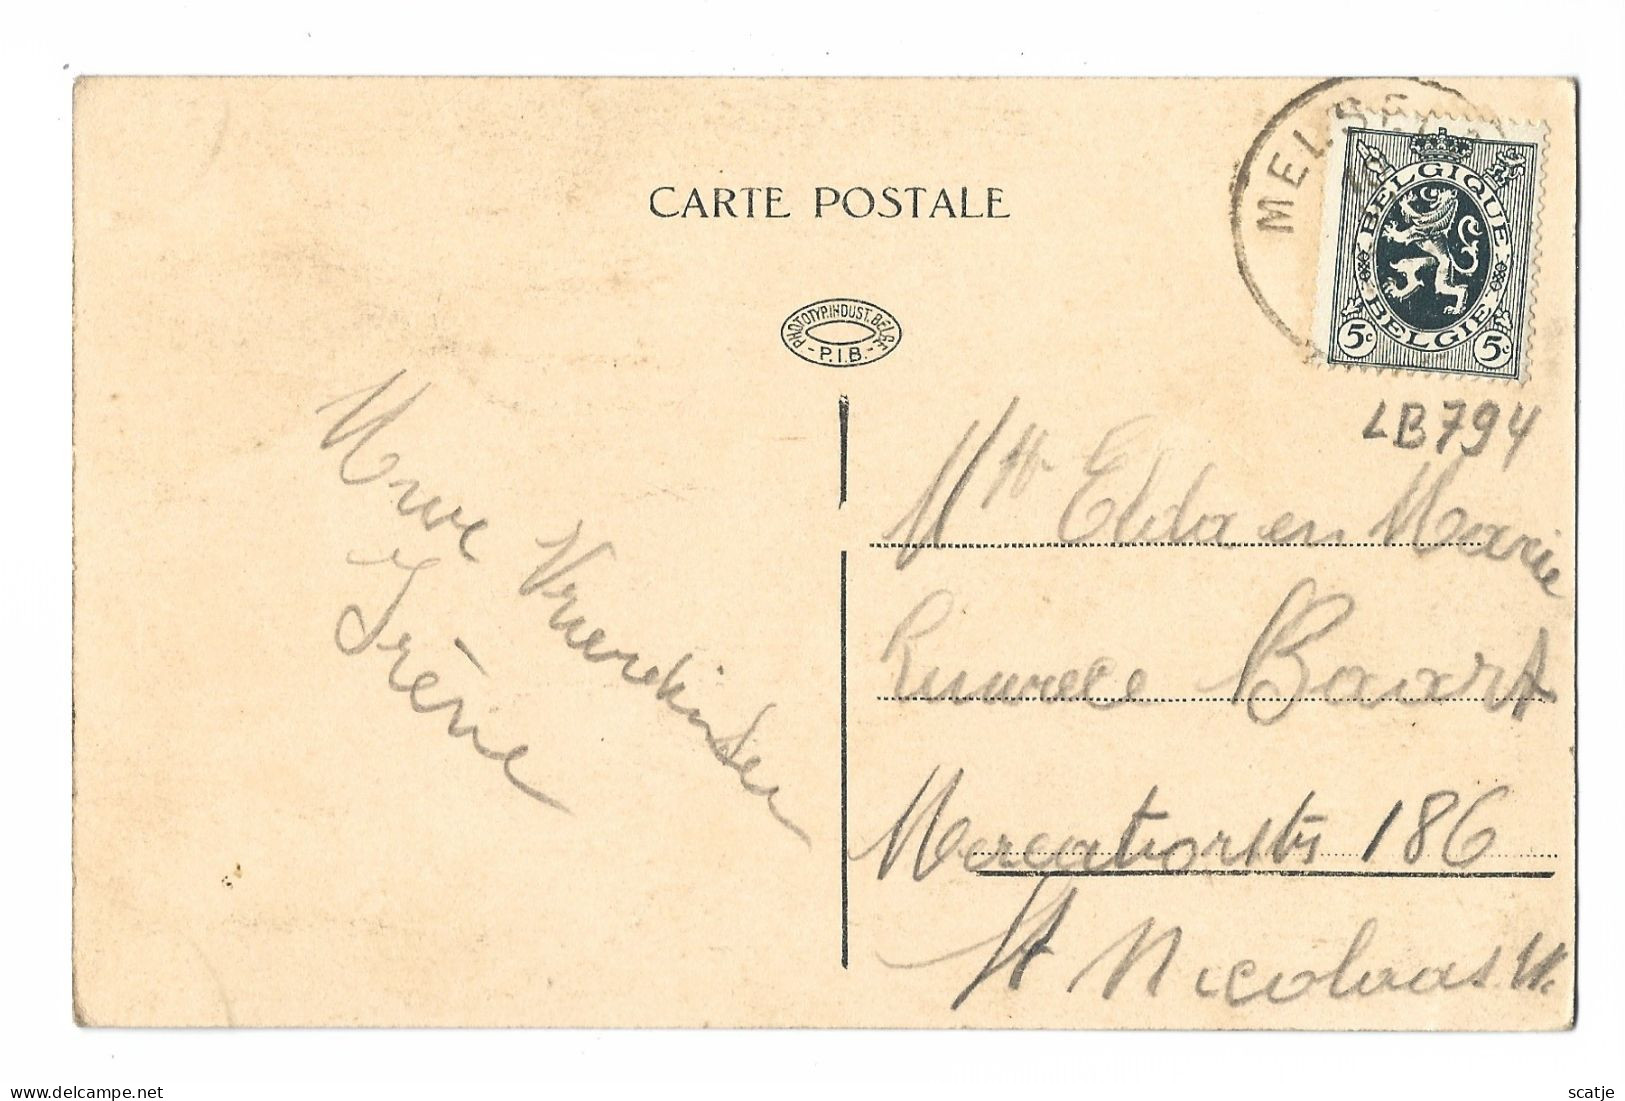 Melsele   -   Mirakuleuze Linde Van Gaverland.   1923   Naar   St. Nicolaas - Beveren-Waas